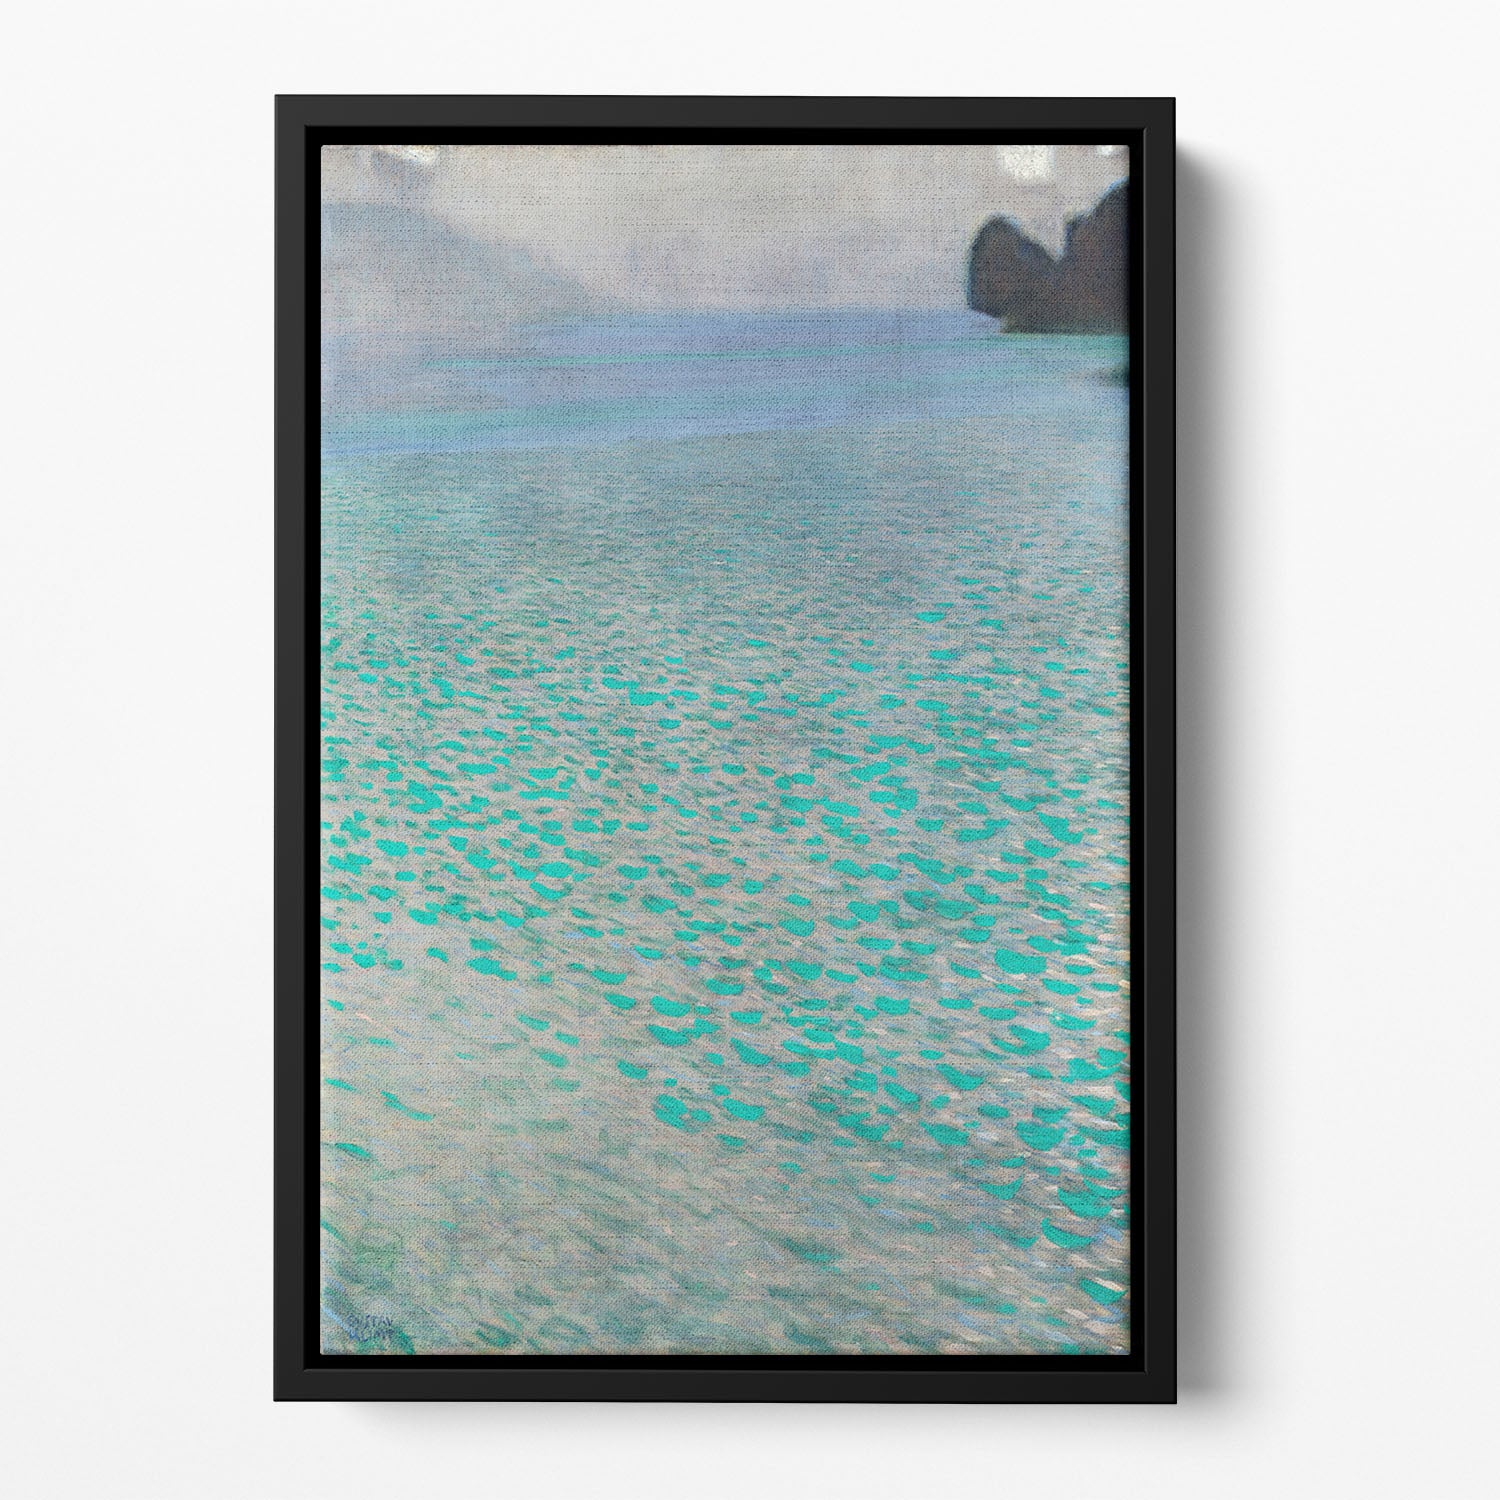 Attersee by Klimt Floating Framed Canvas